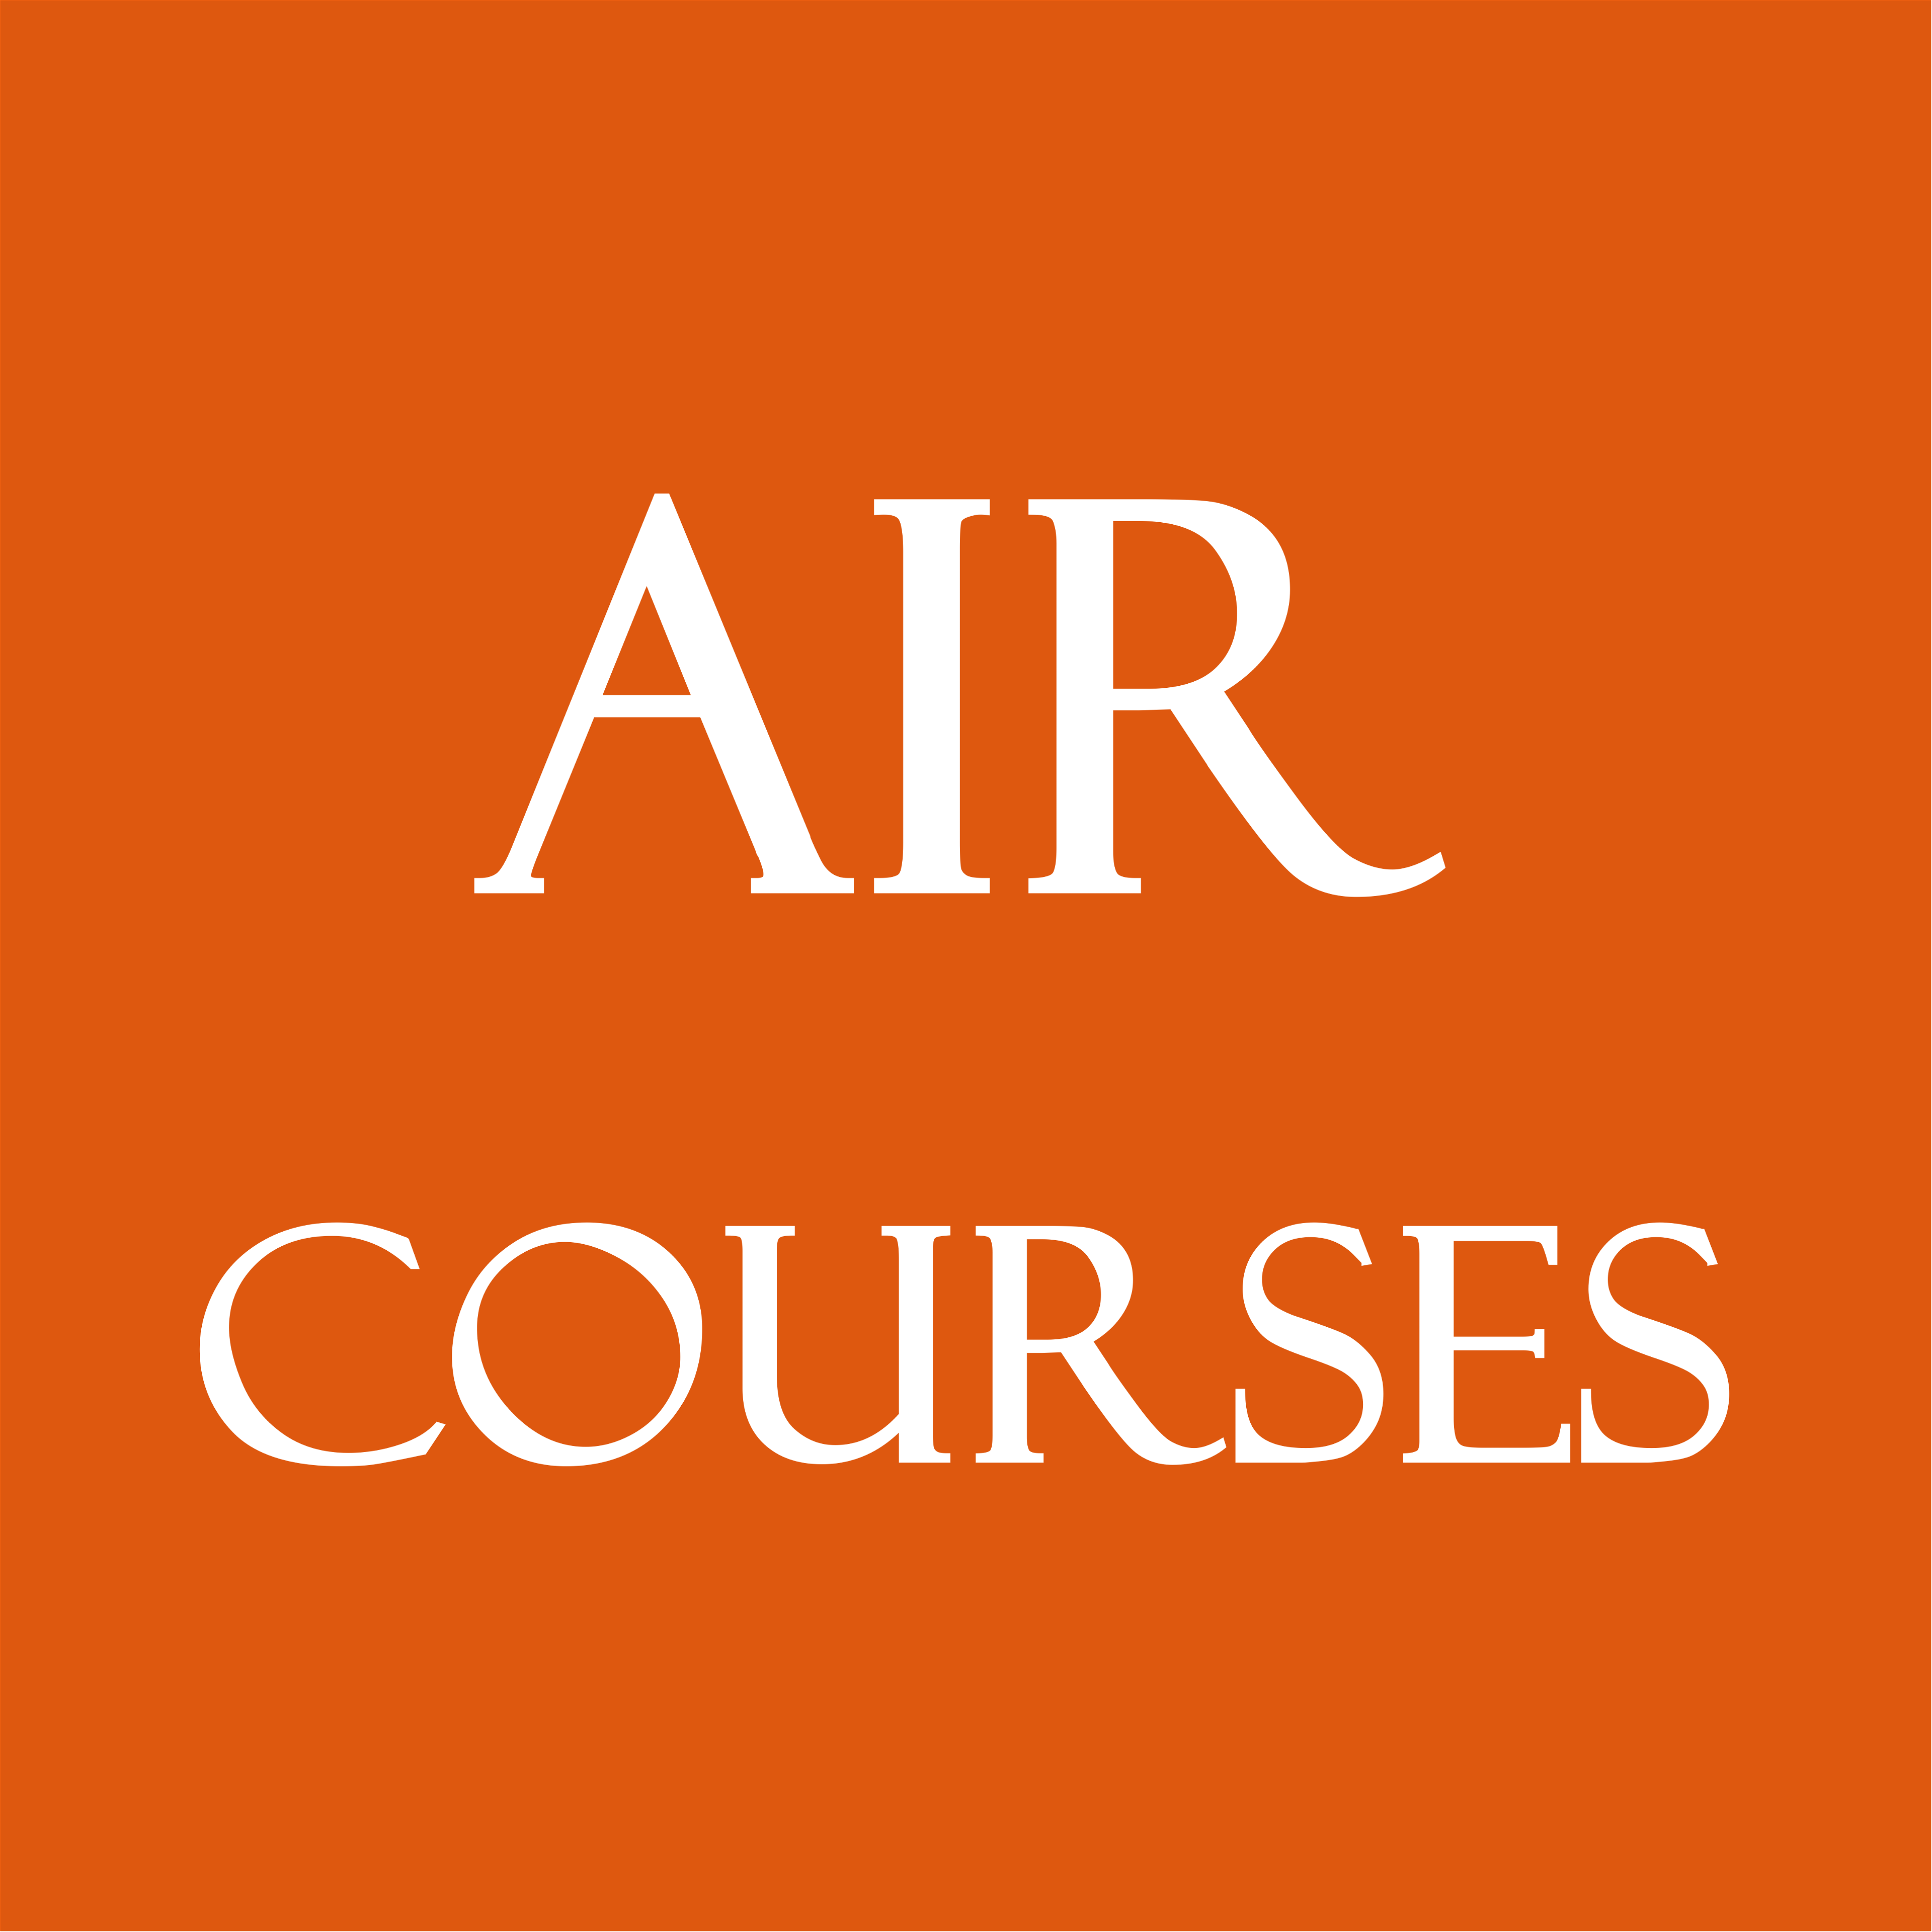 AIR Courses, London logo